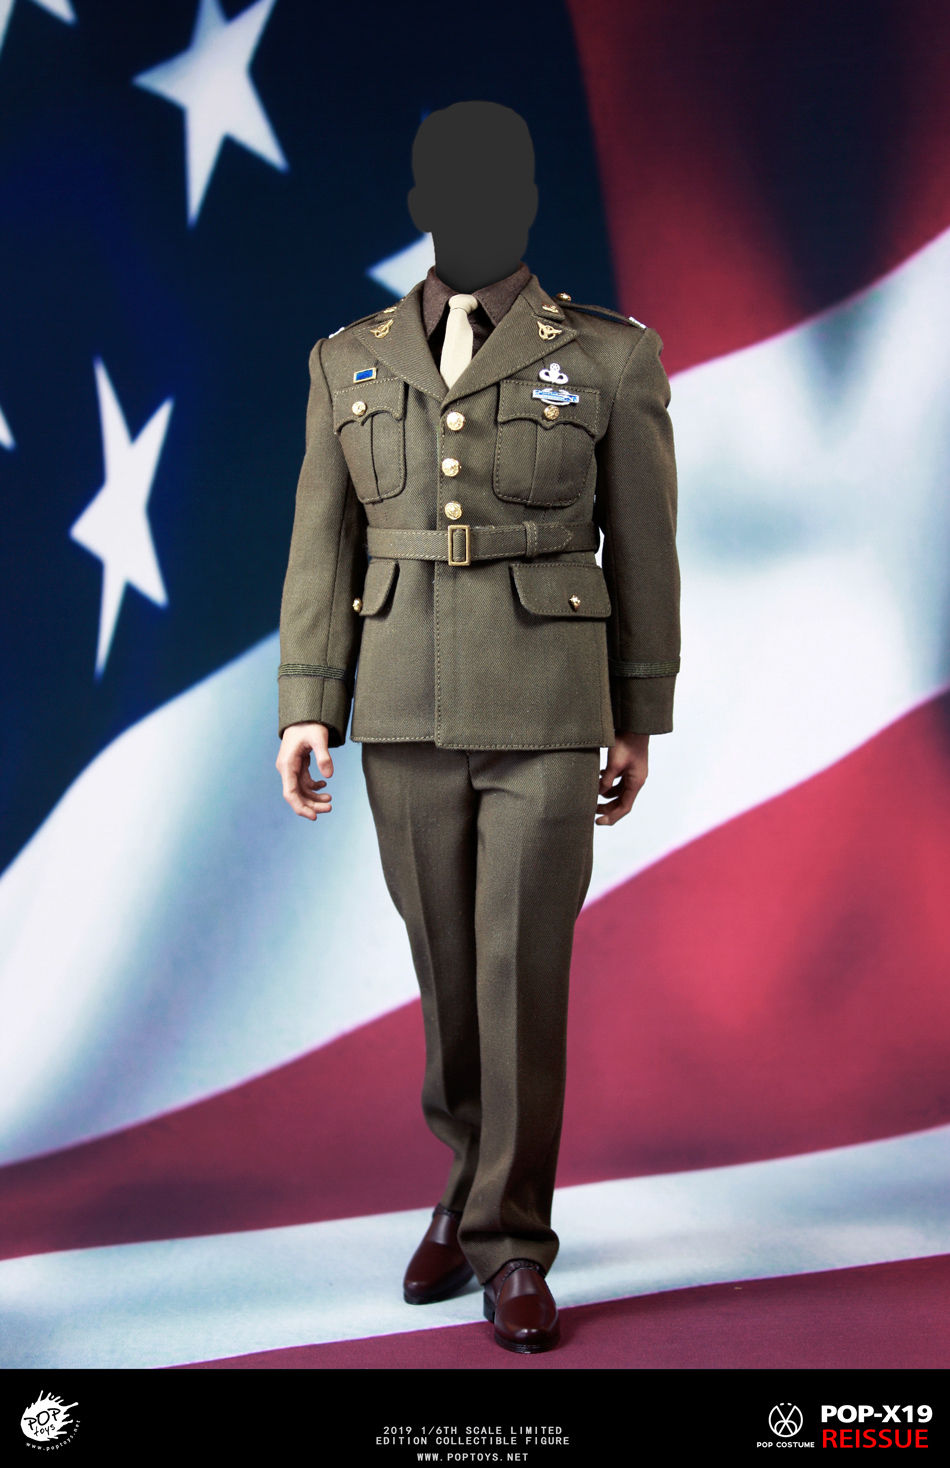 NEW PRODUCT: POPTOYS: 1/6 Series X19 World War II Edition Golden Age US Team Uniform Uniform Set - 19 Years Reprint 15021210